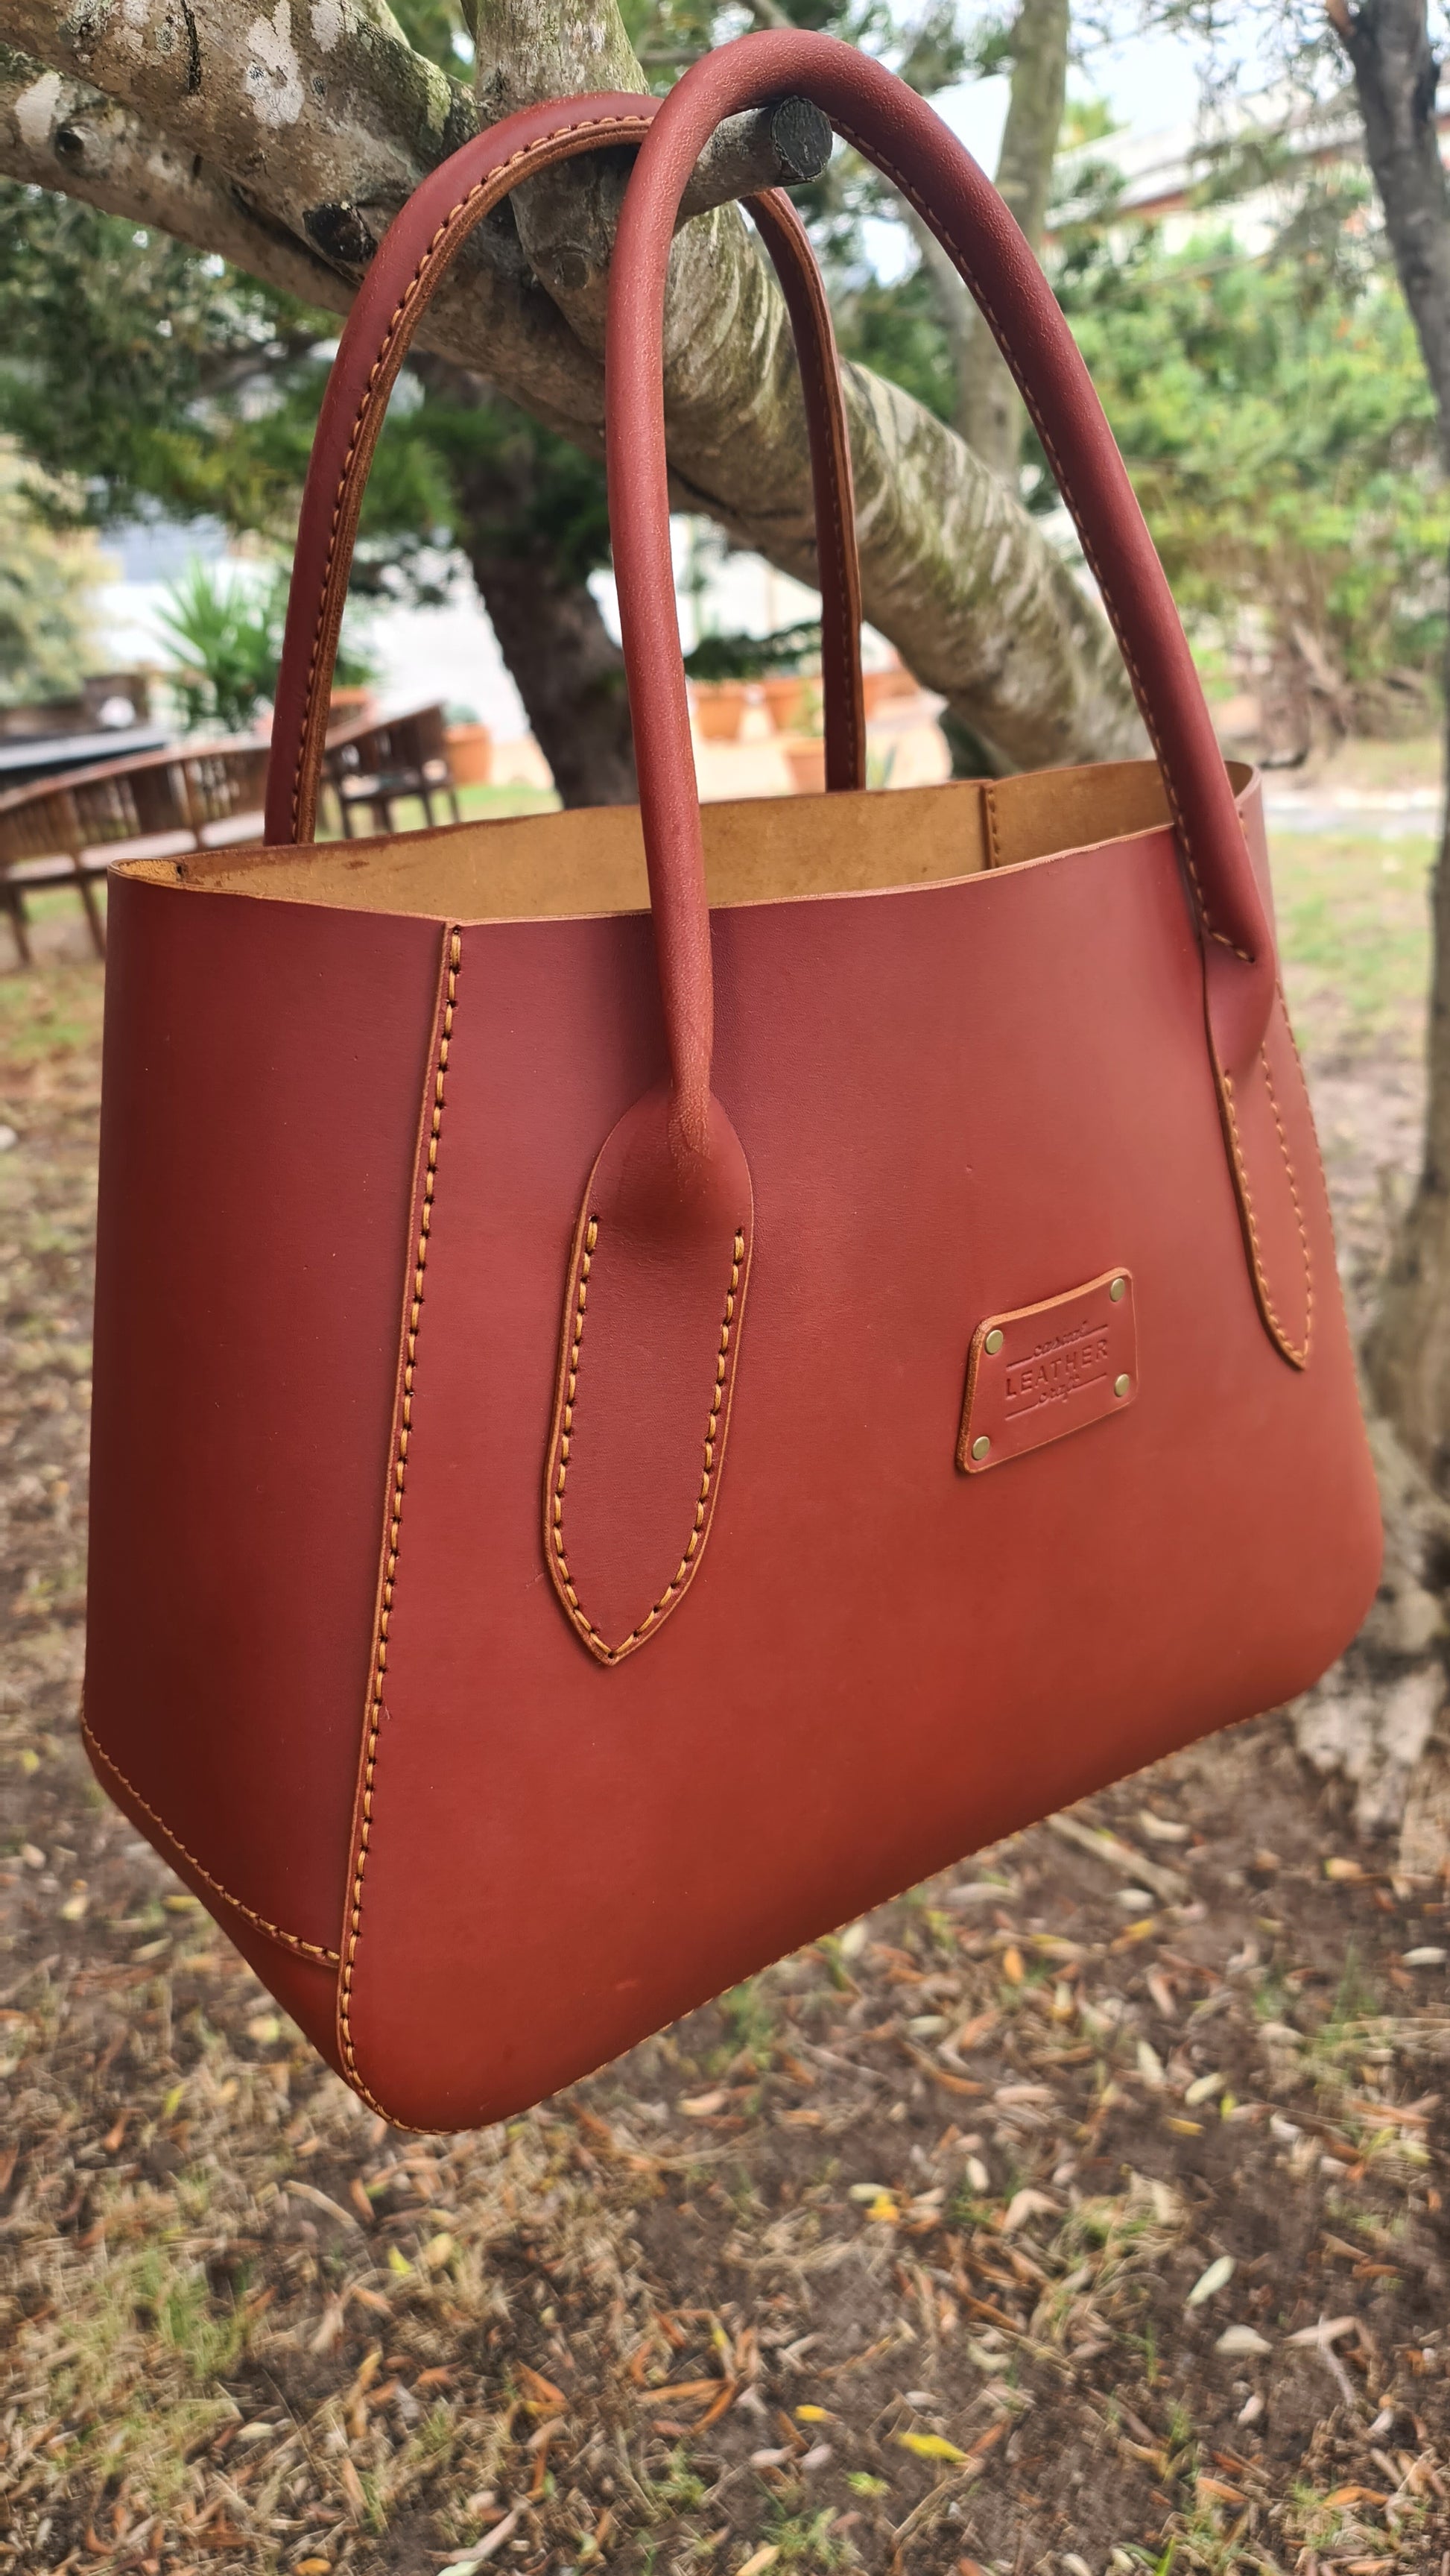 Buy Shoulder Bag Pattern/diy Gift/handbag Pattern/leathercraft